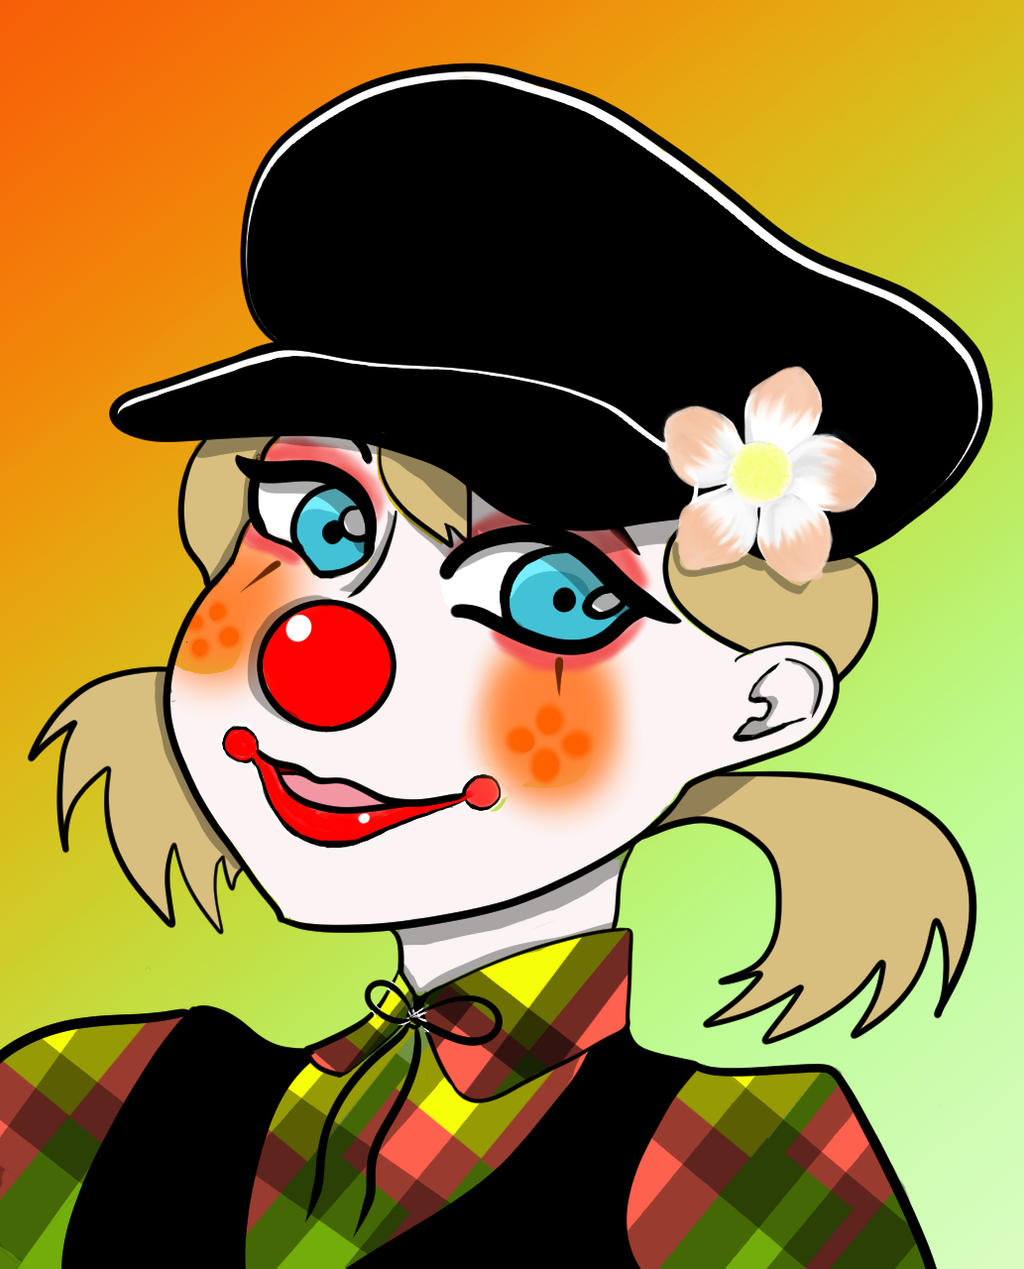 clownidoodle by HonkeyTheClown on DeviantArt